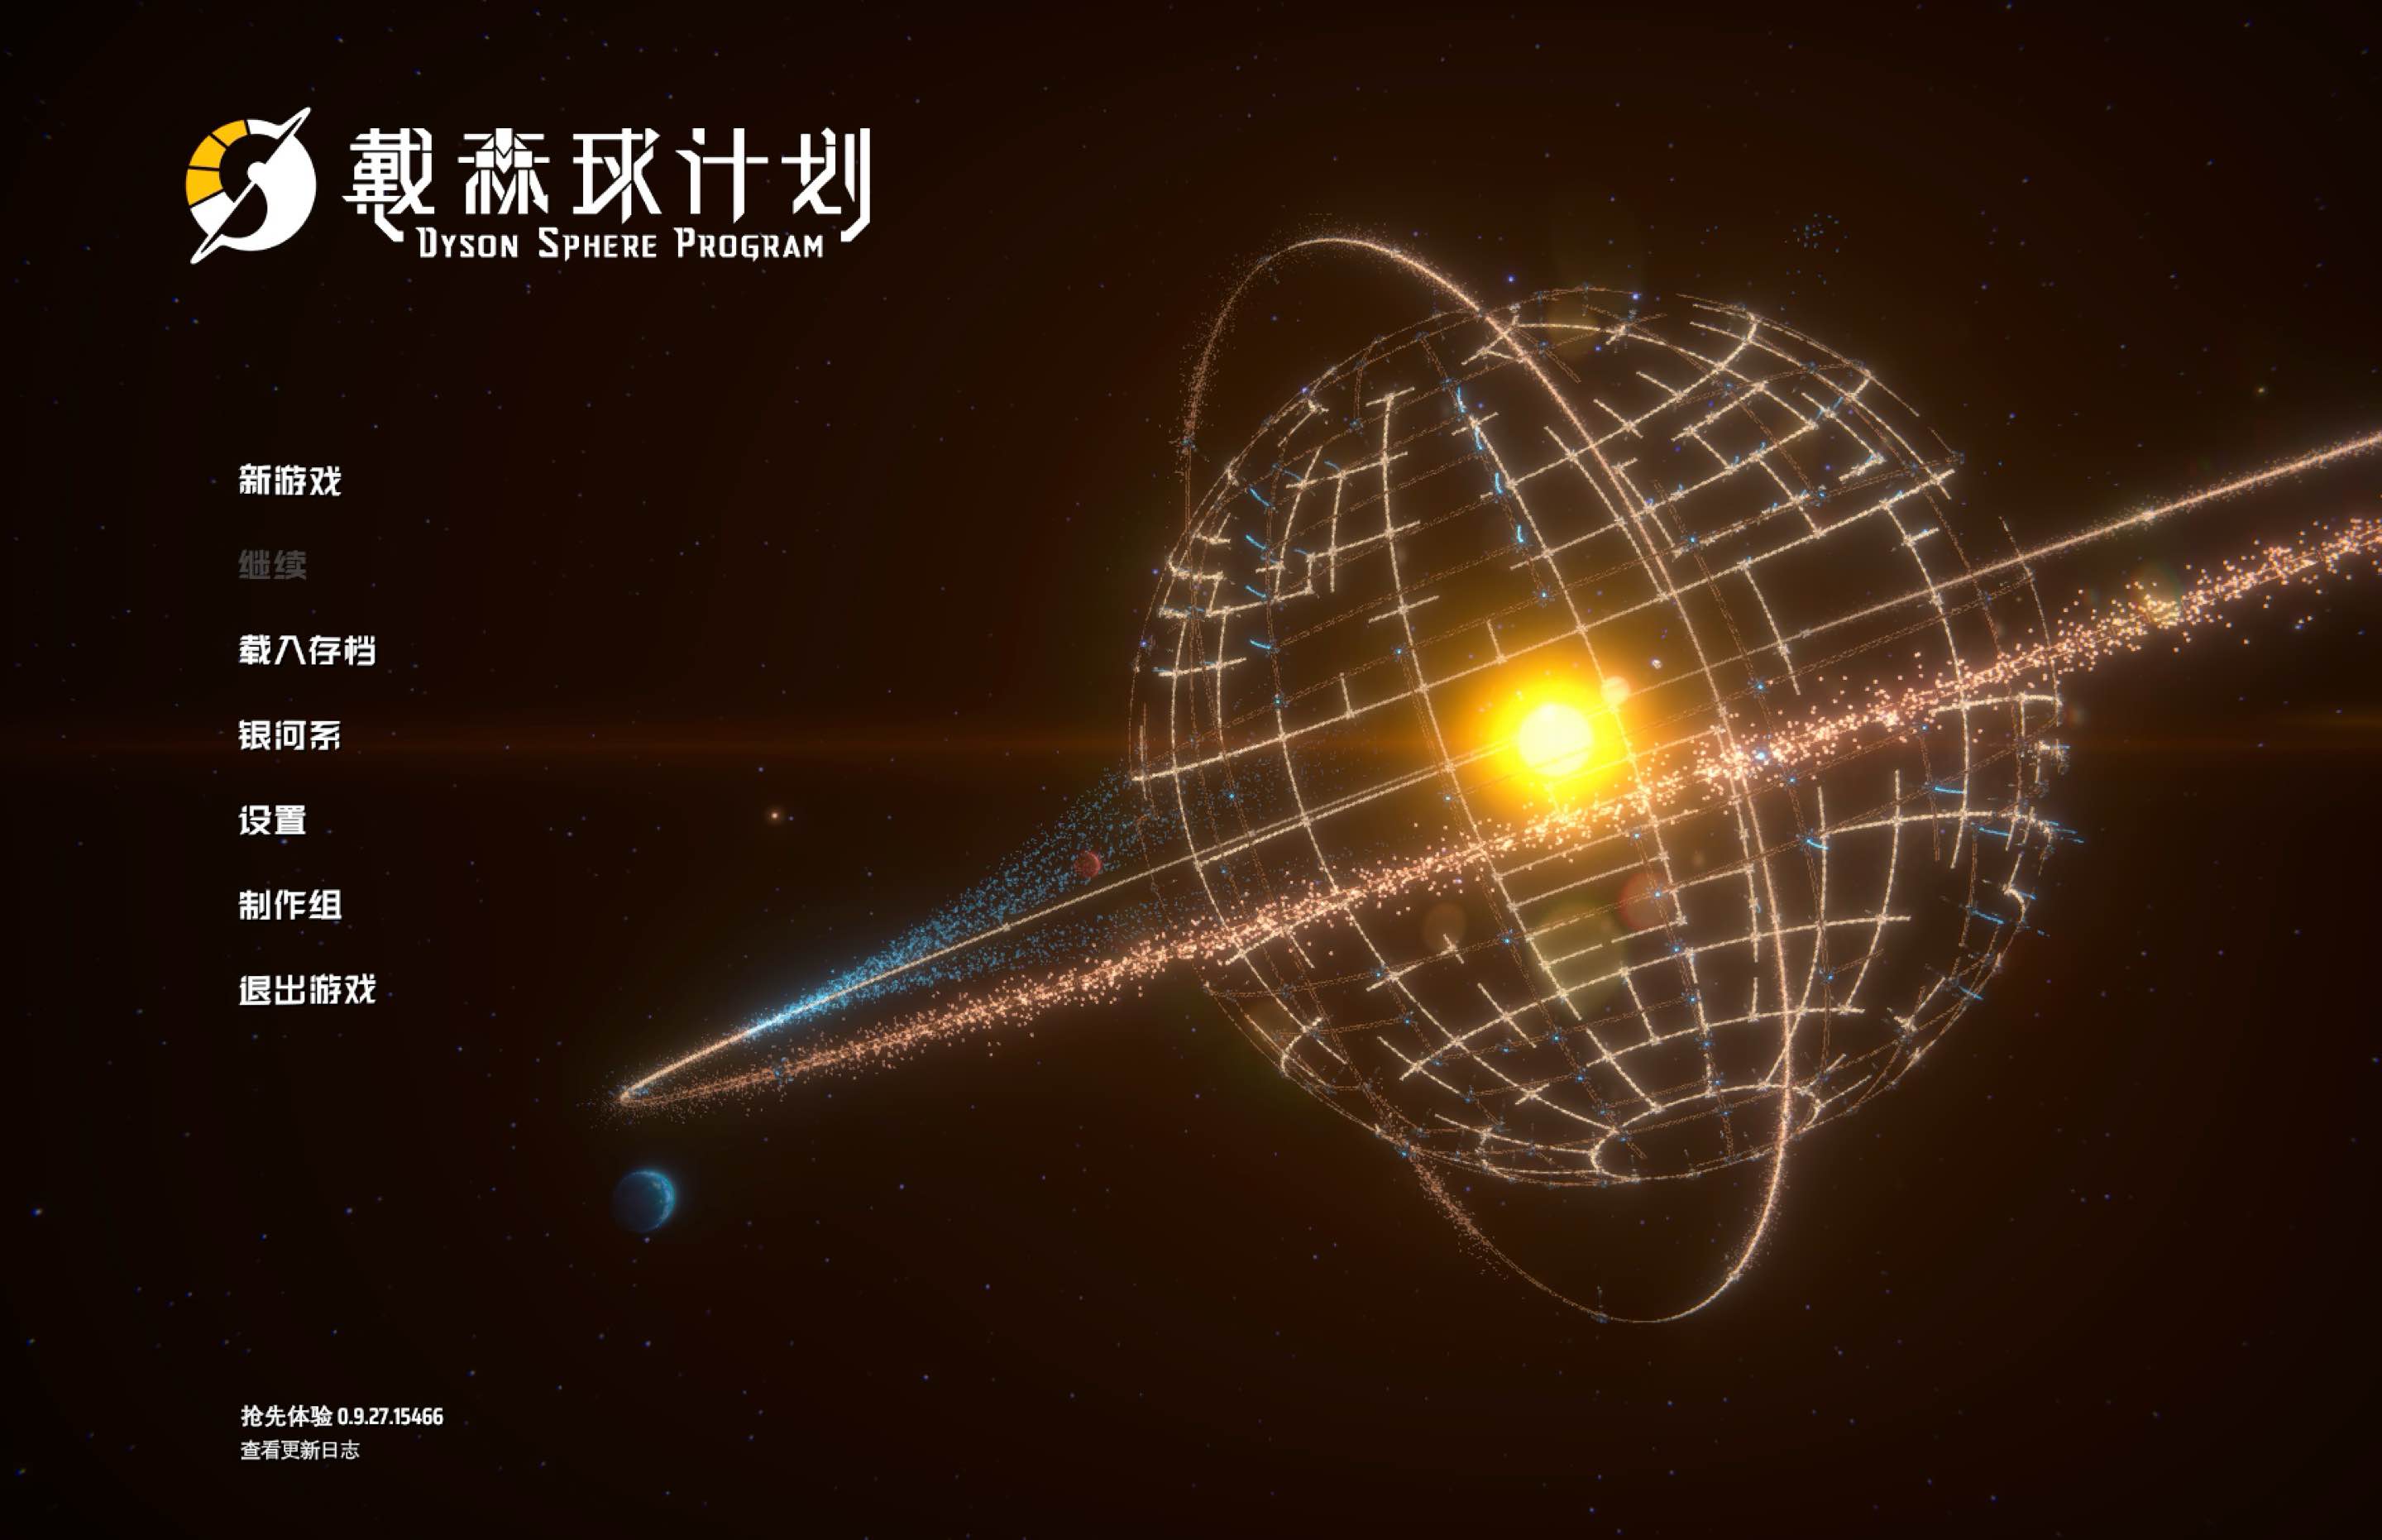 戴森球计划 for Mac Dyson Sphere Program v0.10.29.21940 中文移植版 苹果电脑